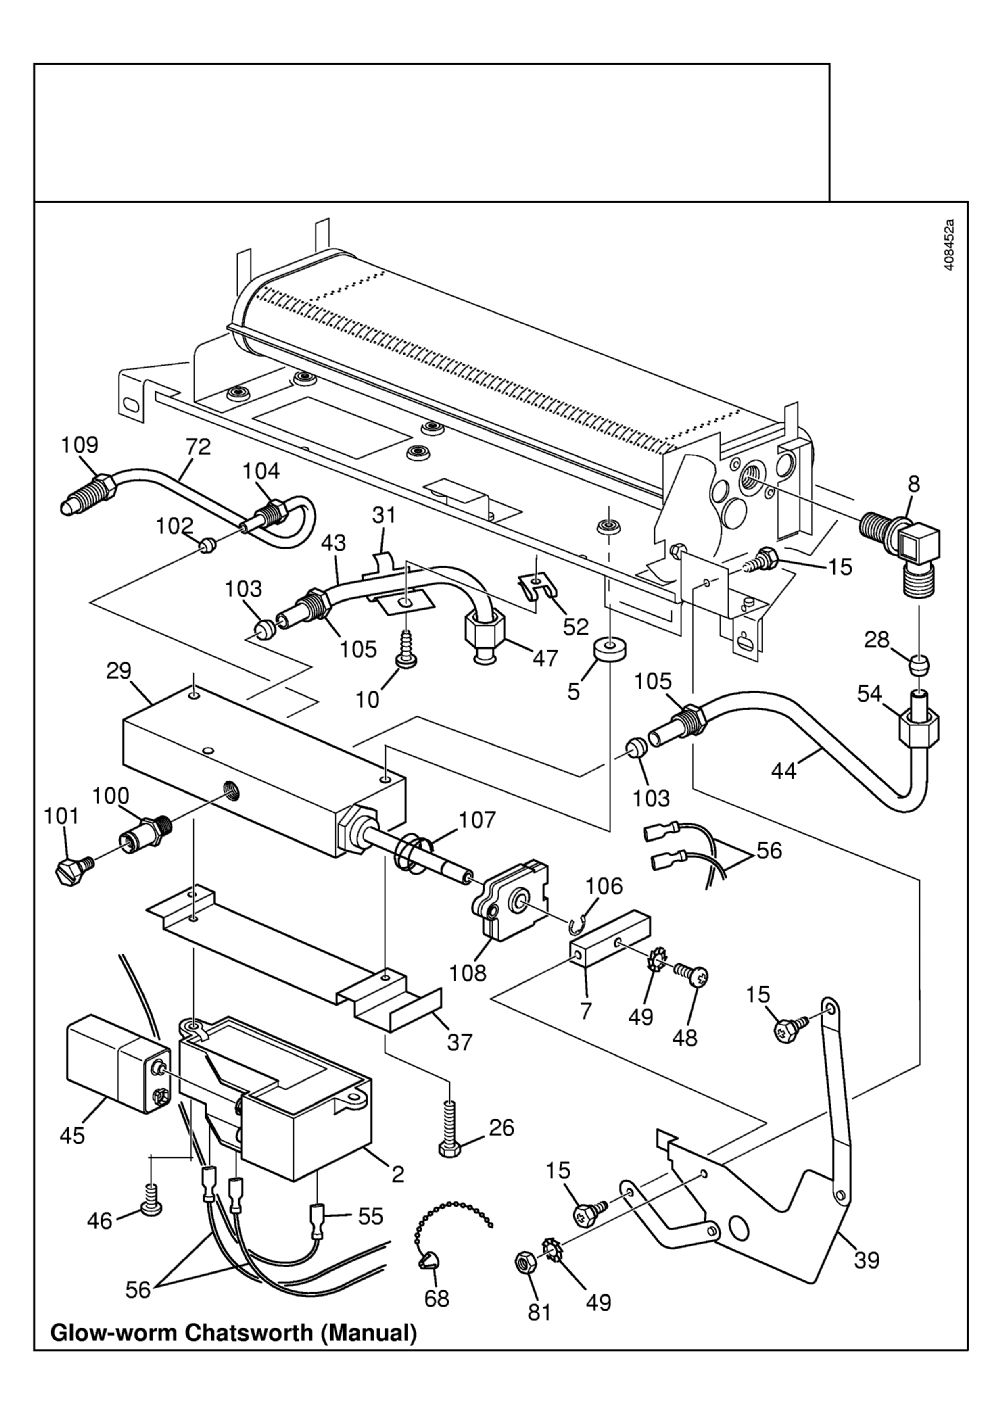 Chatsworth (Manual) - appliance_2080